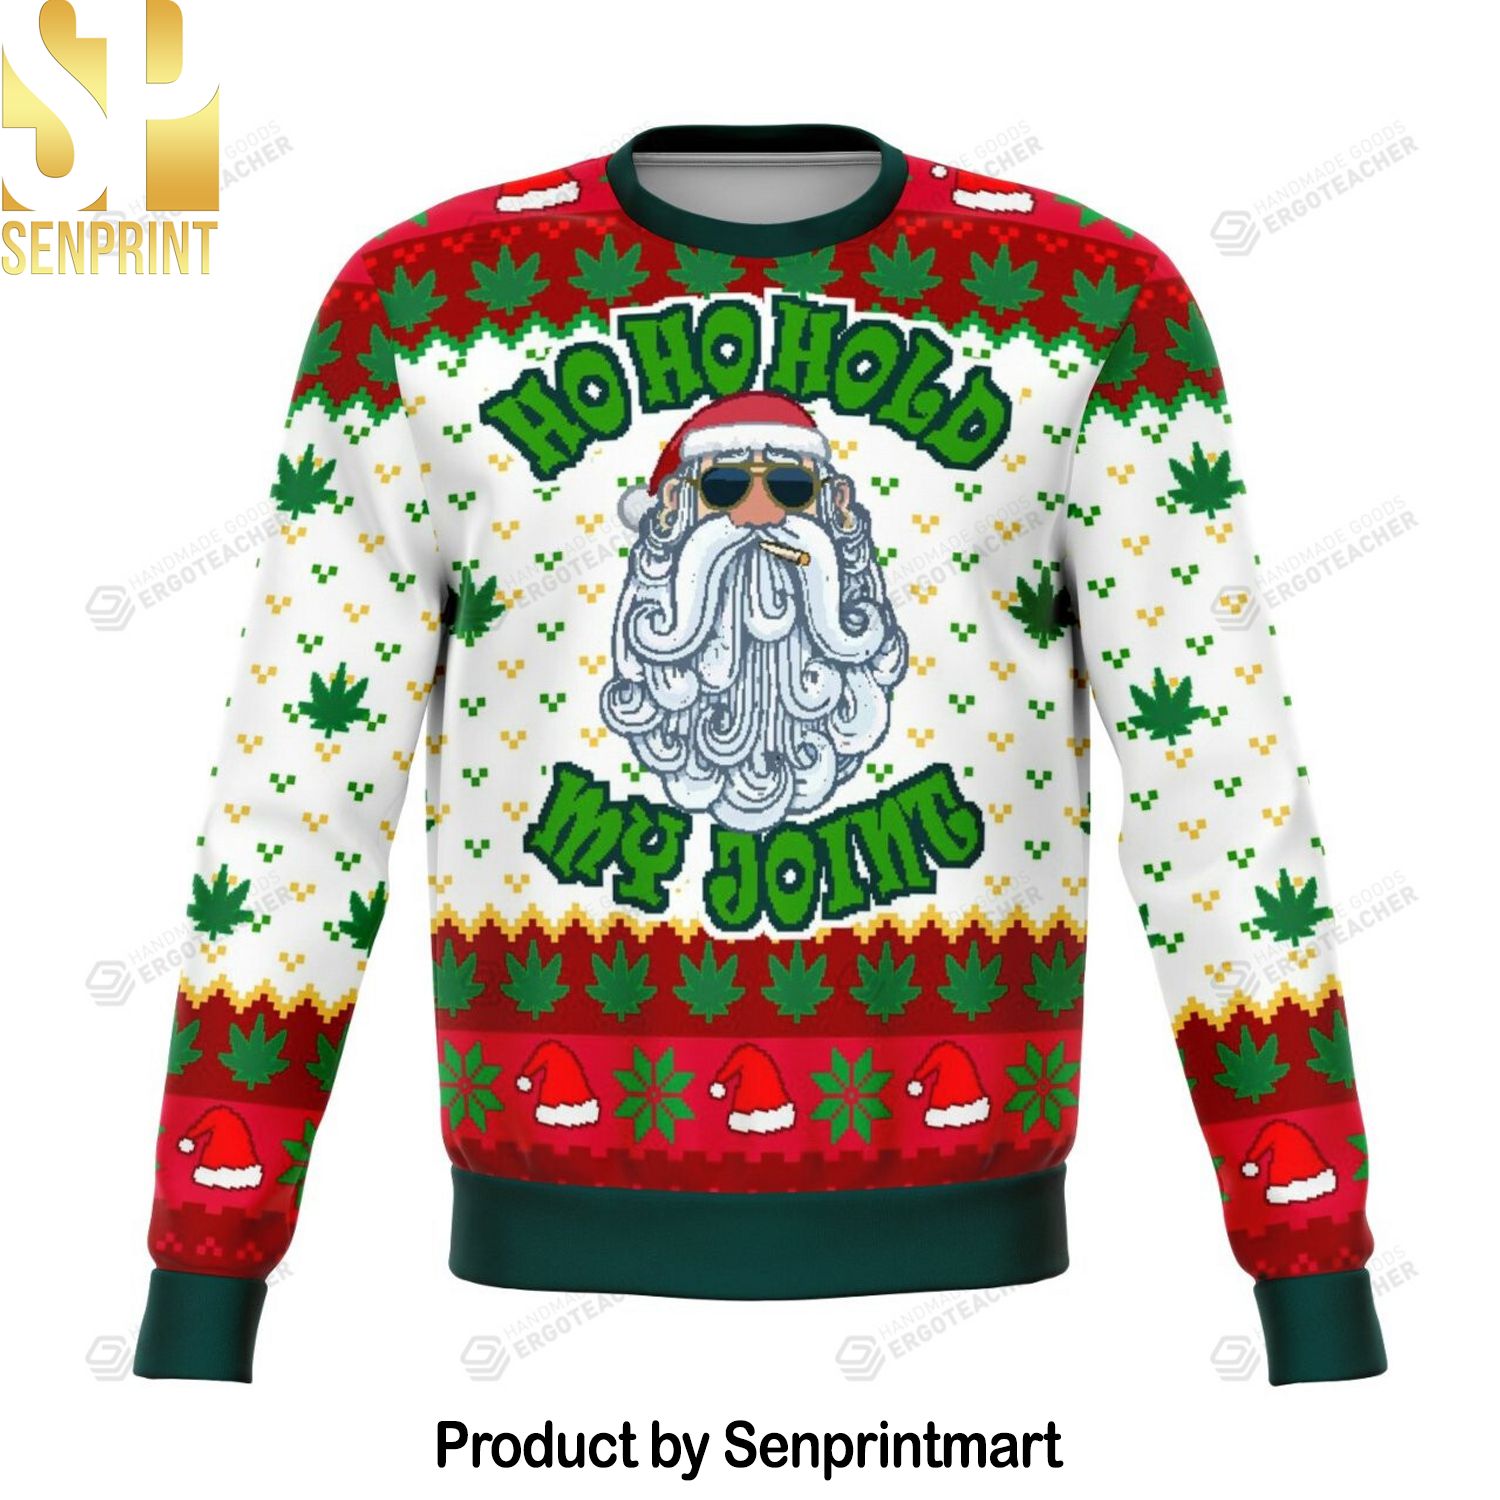 Ho Ho Ho Ho My Joint Dank Knitting Pattern Ugly Christmas Holiday Sweater